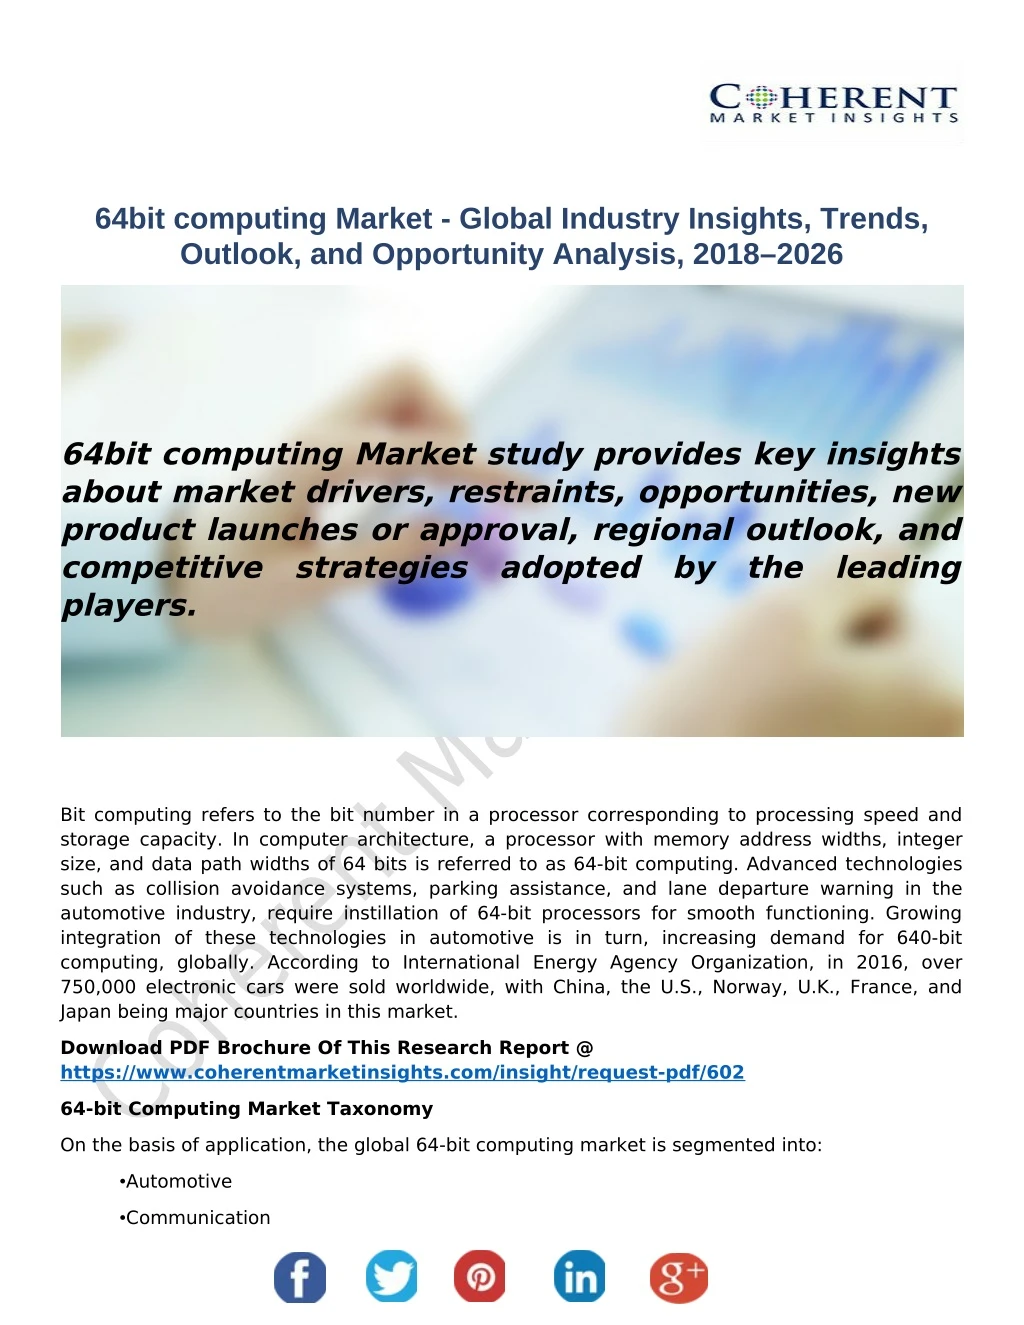 64bit computing market global industry insights